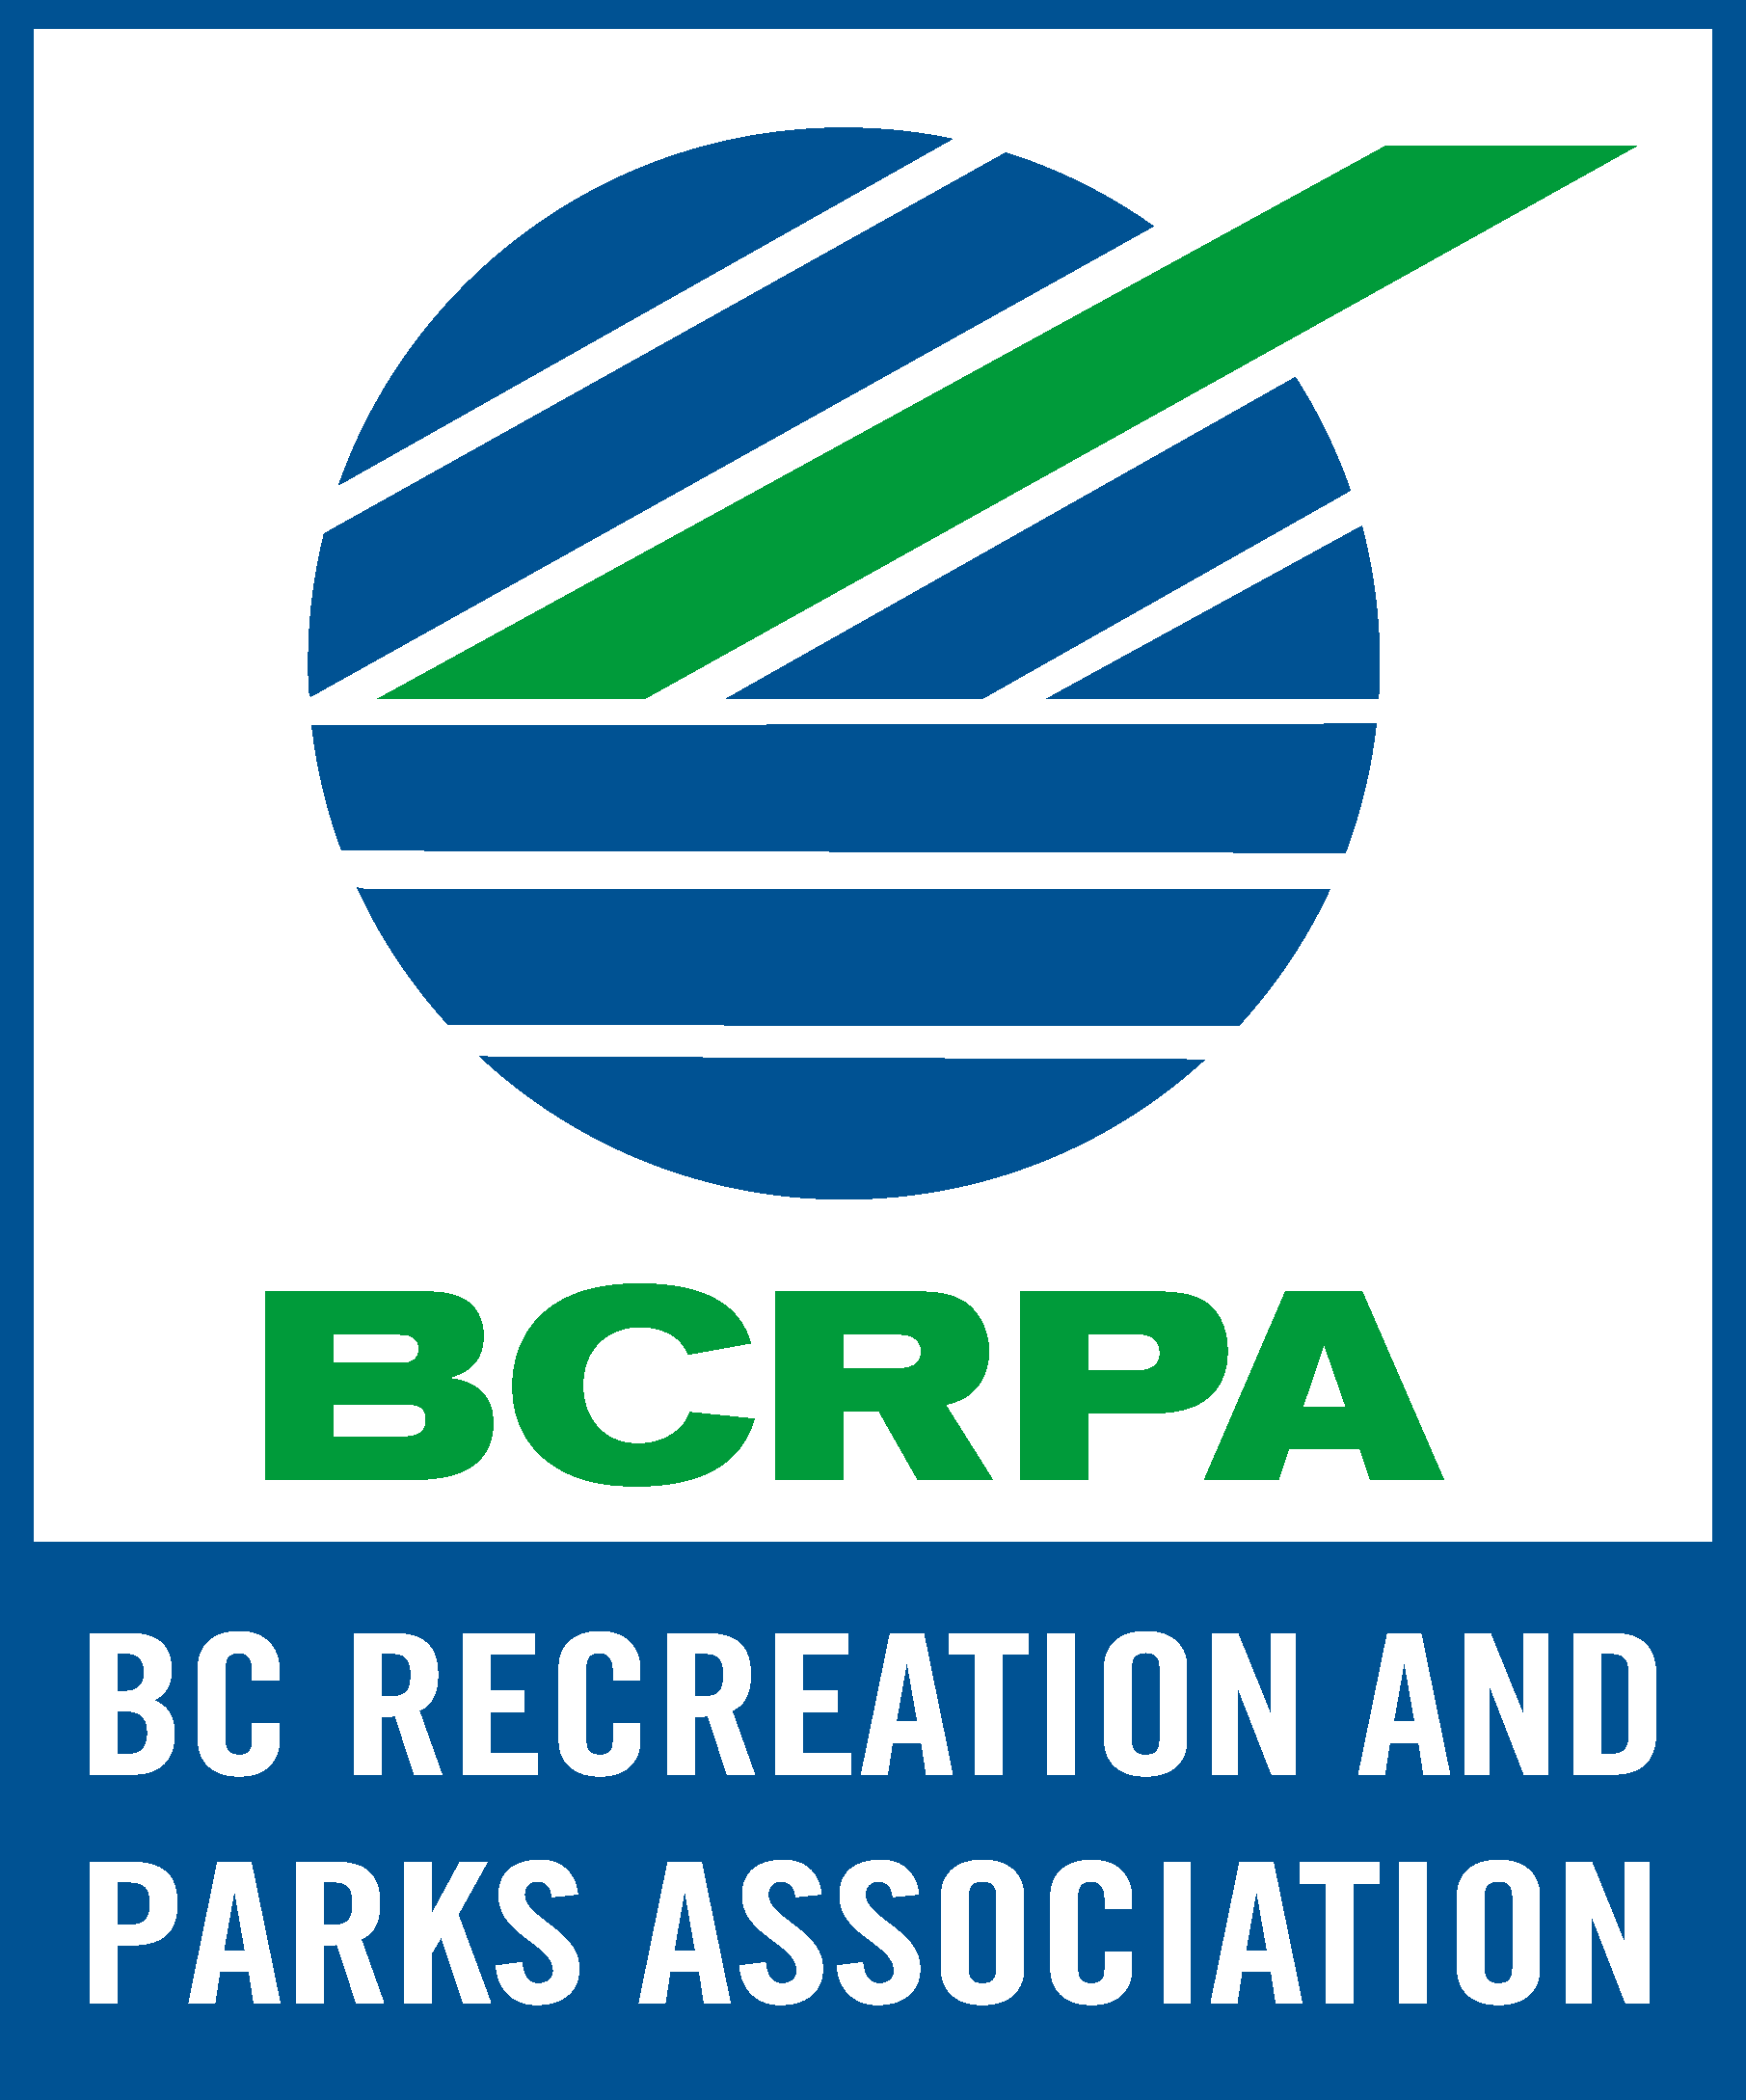 BCRPA_corporate logo_RGB.png